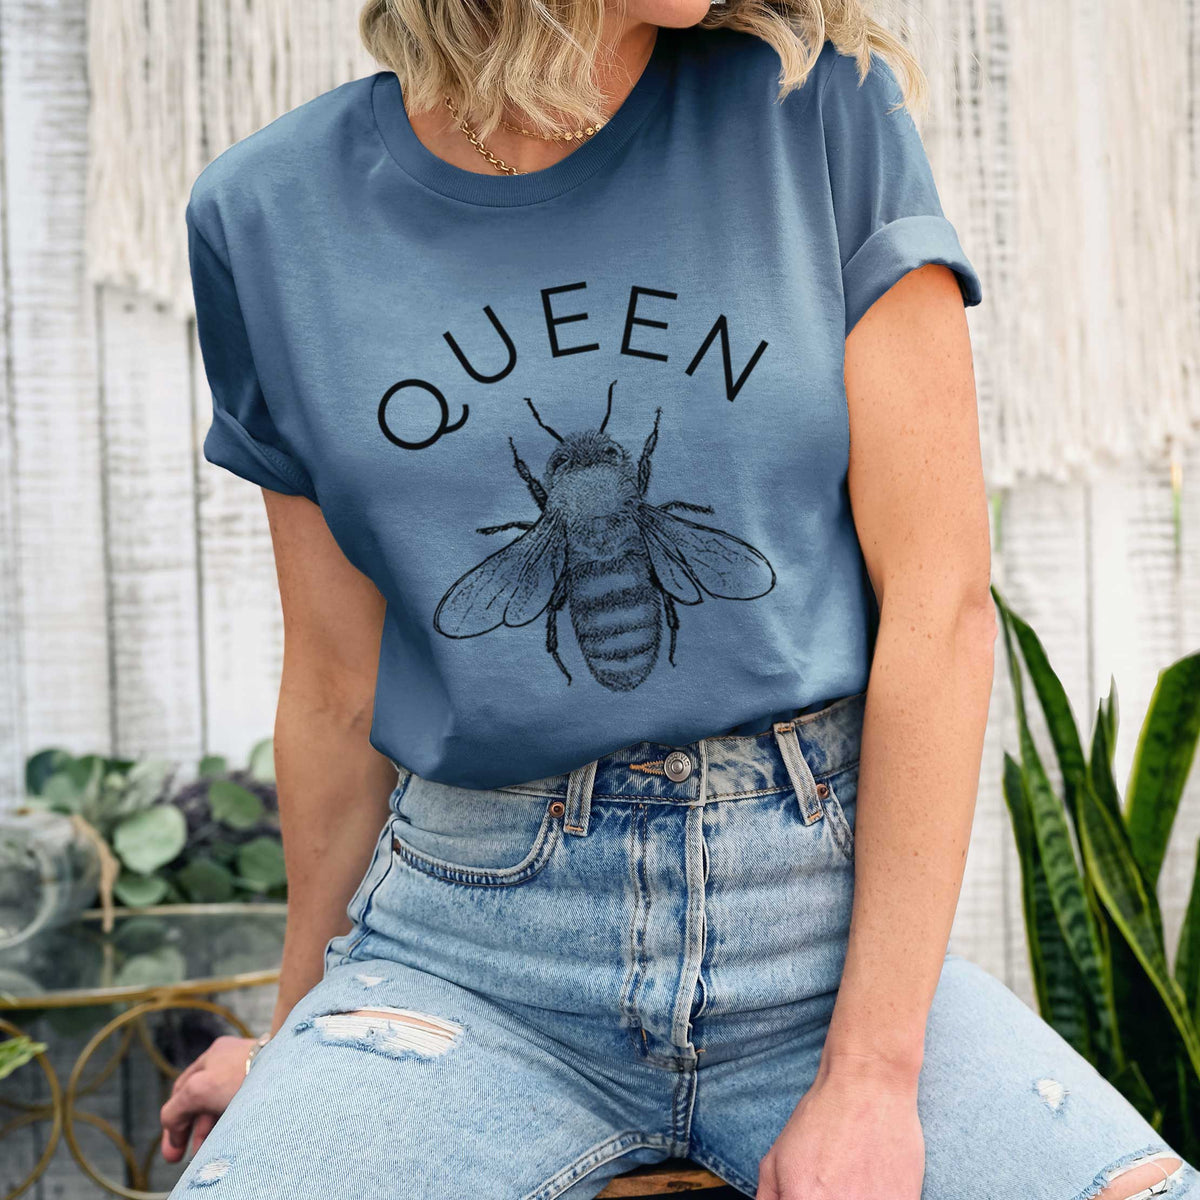 Queen Bee - Lightweight 100% Cotton Unisex Crewneck